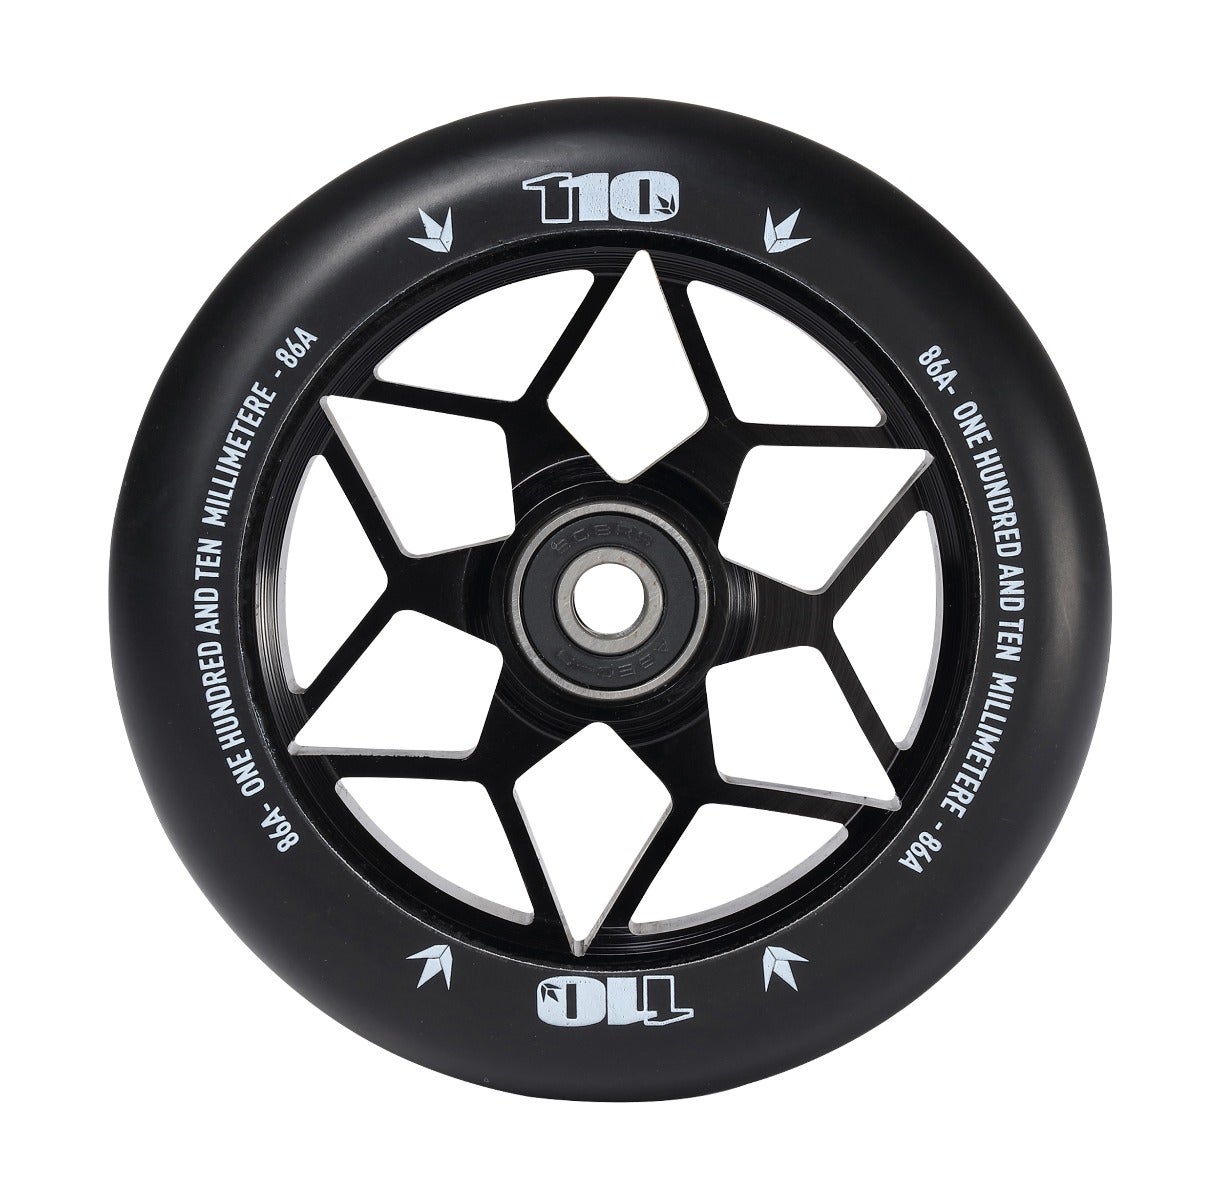 Blunt Envy Diamond Scooter Wheel Pair - 110mm x 24mm - Black